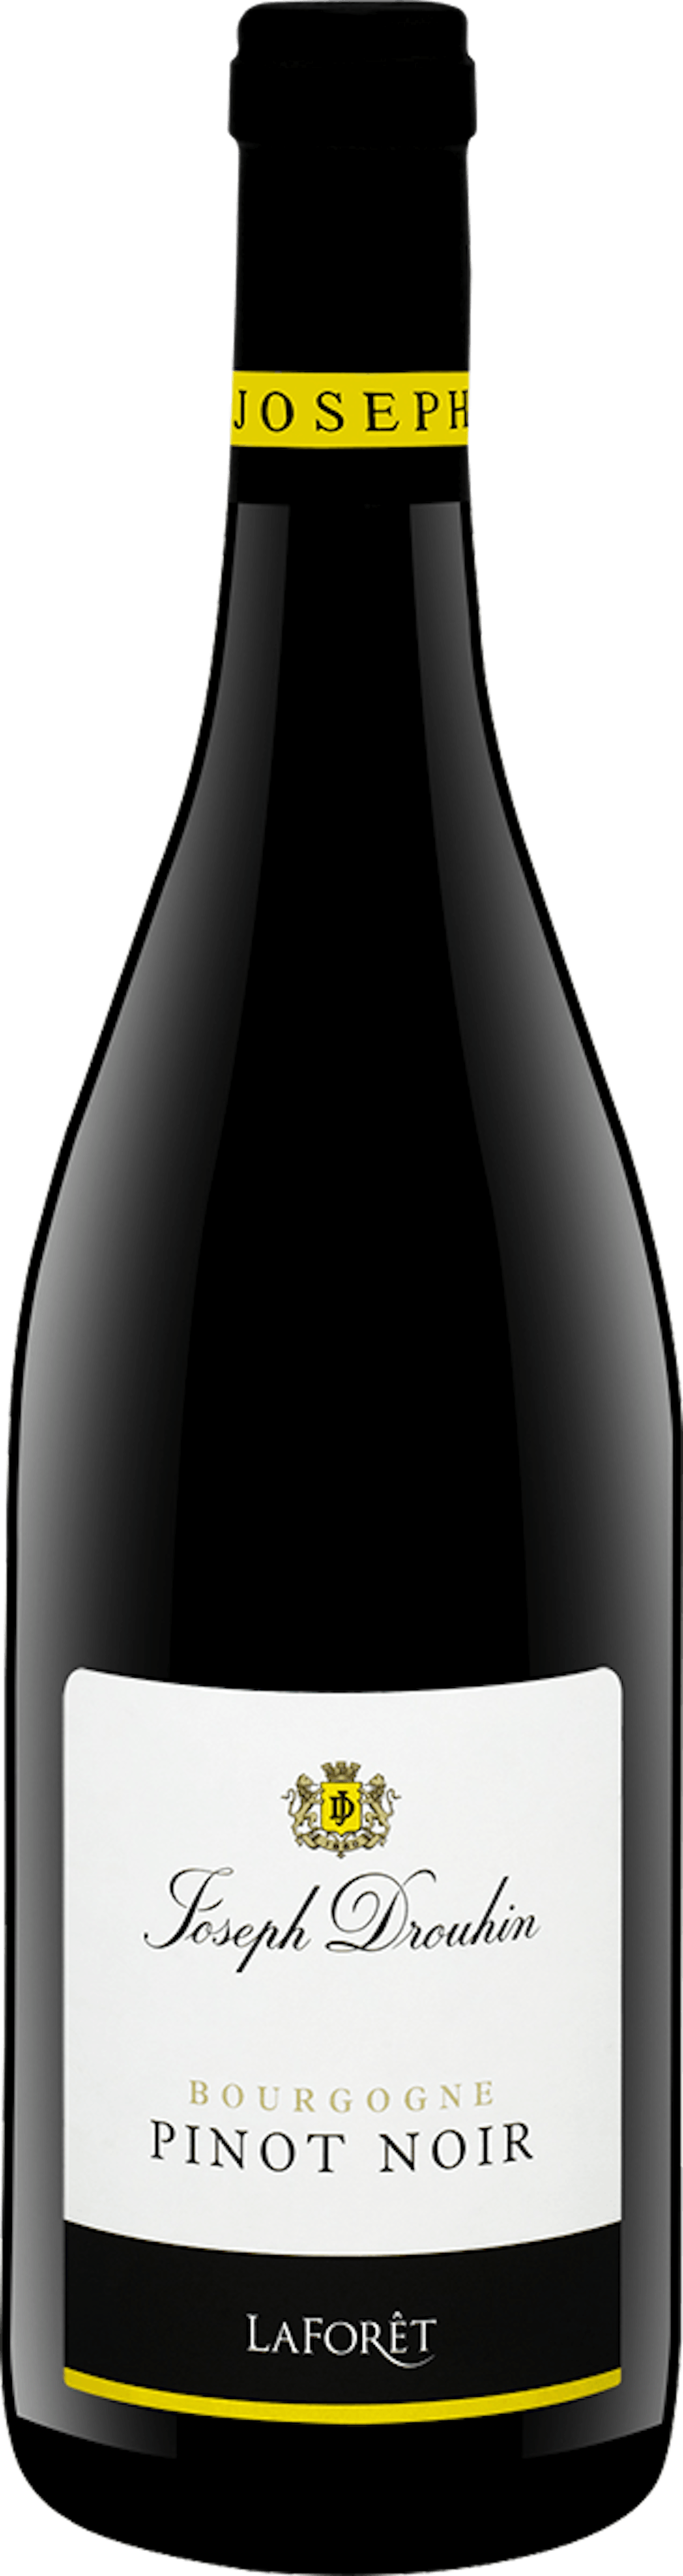 Laforêt Bourgogne Pinot Noir